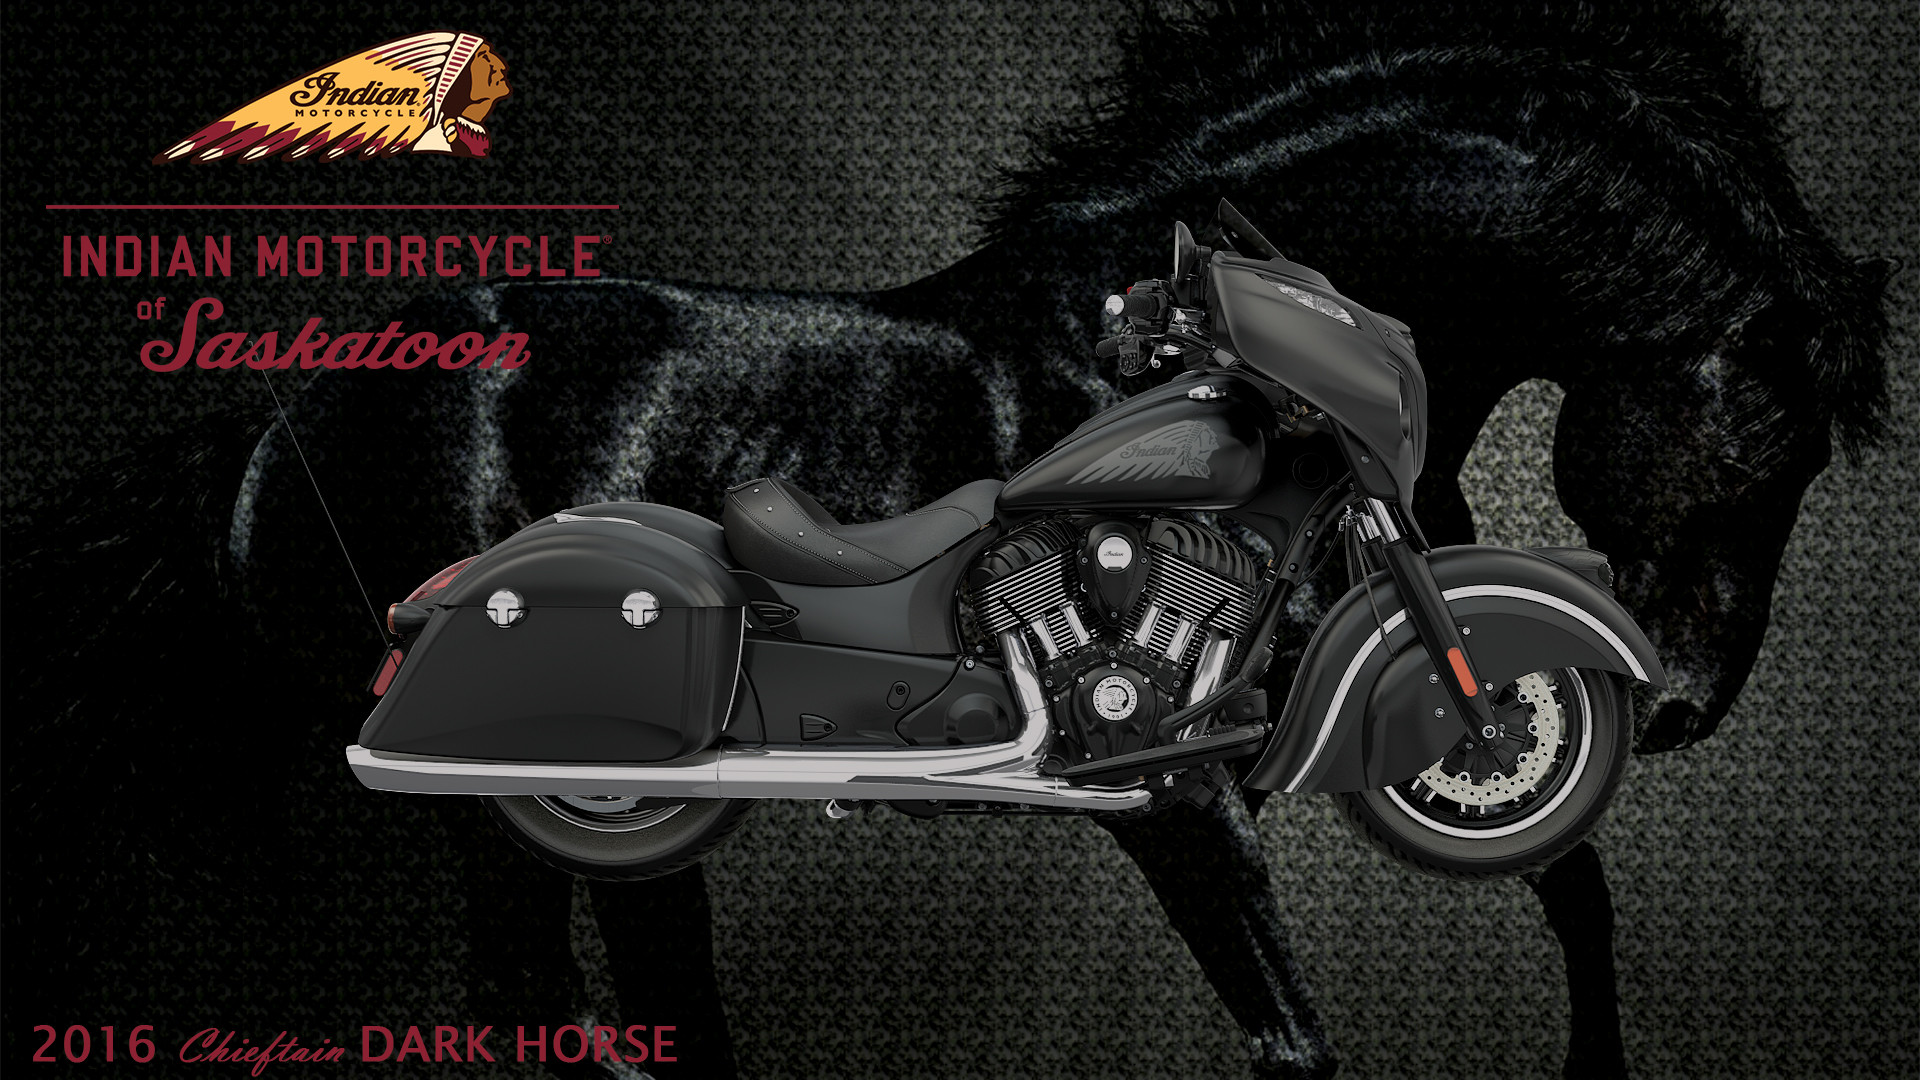 1920x1080 Wallpapers. Indian Motorcycle Saskatoon Chieftain Dark Horse